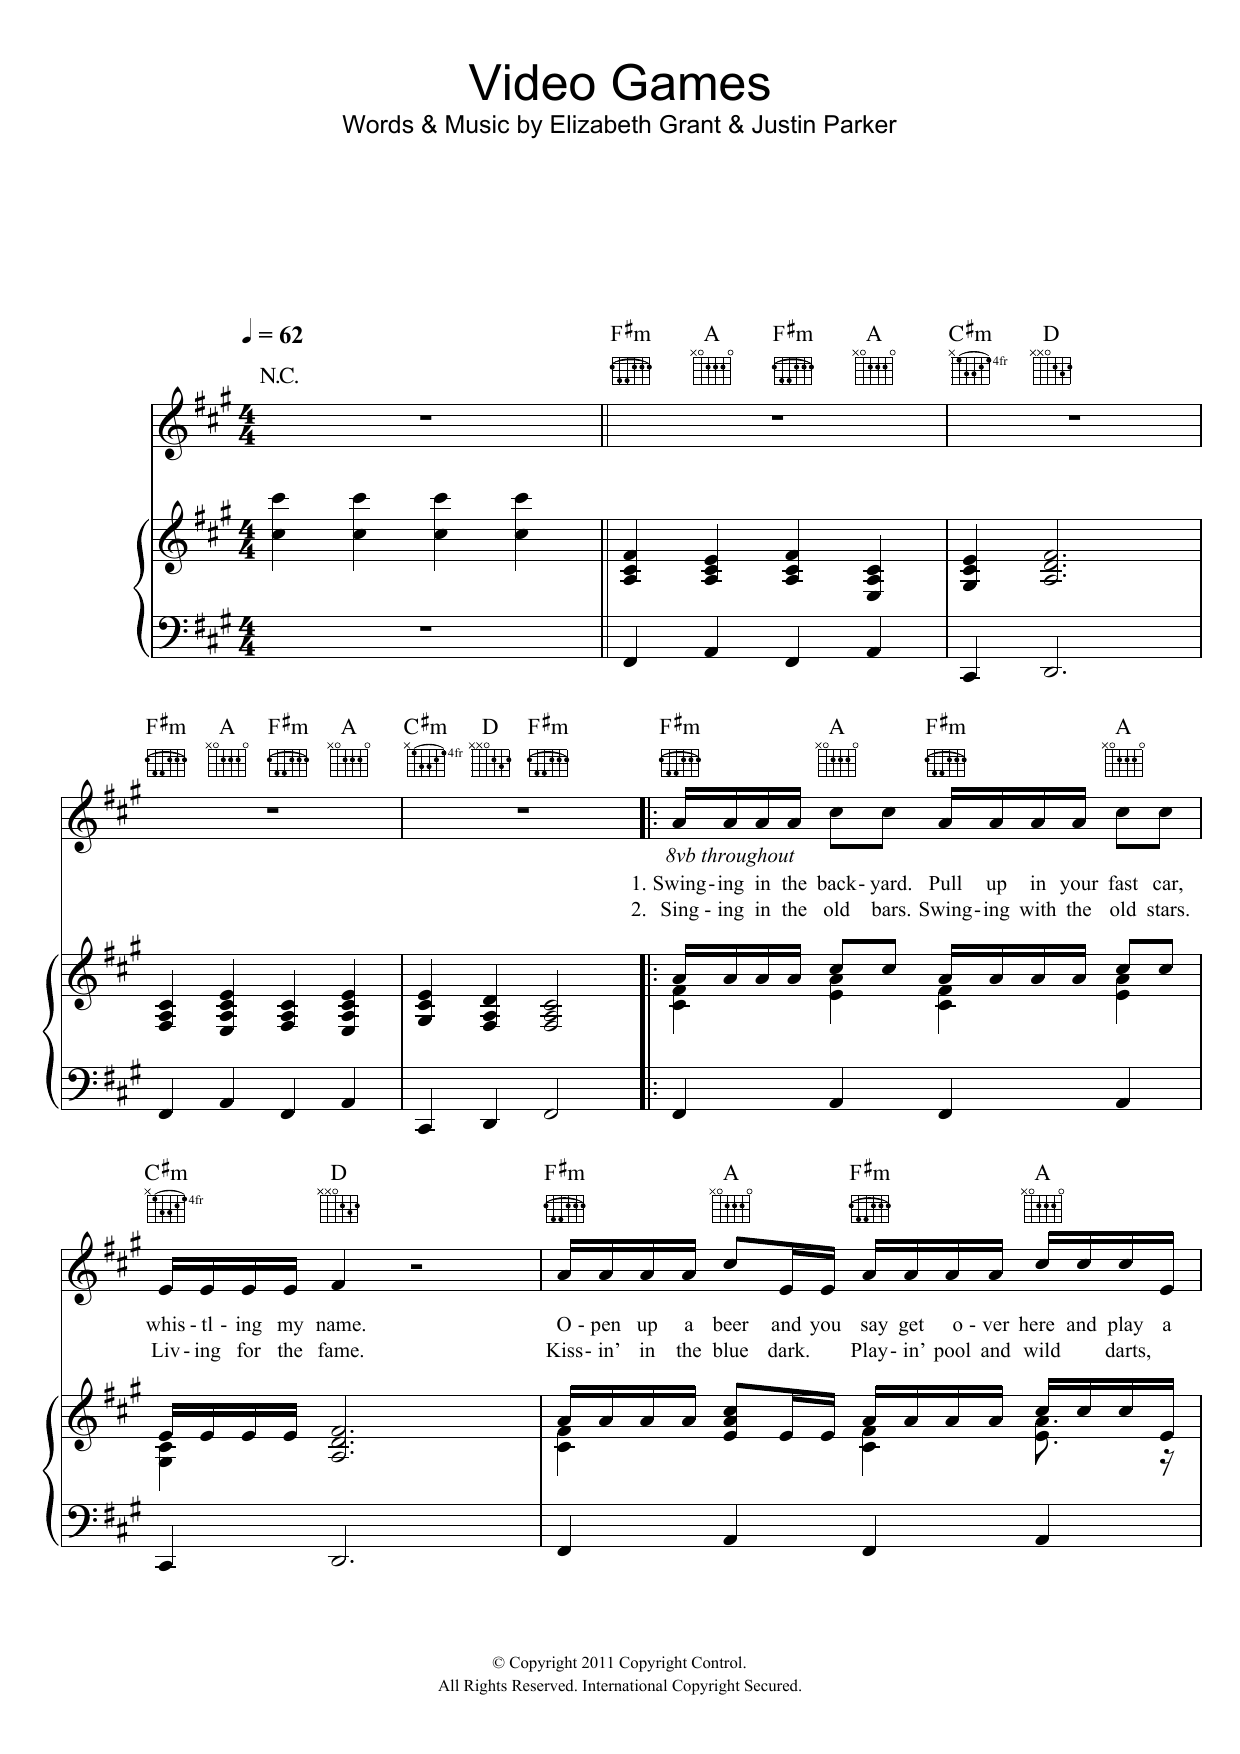 Lana Del Rey Video Games Sheet Music Notes & Chords for Lyrics & Chords - Download or Print PDF